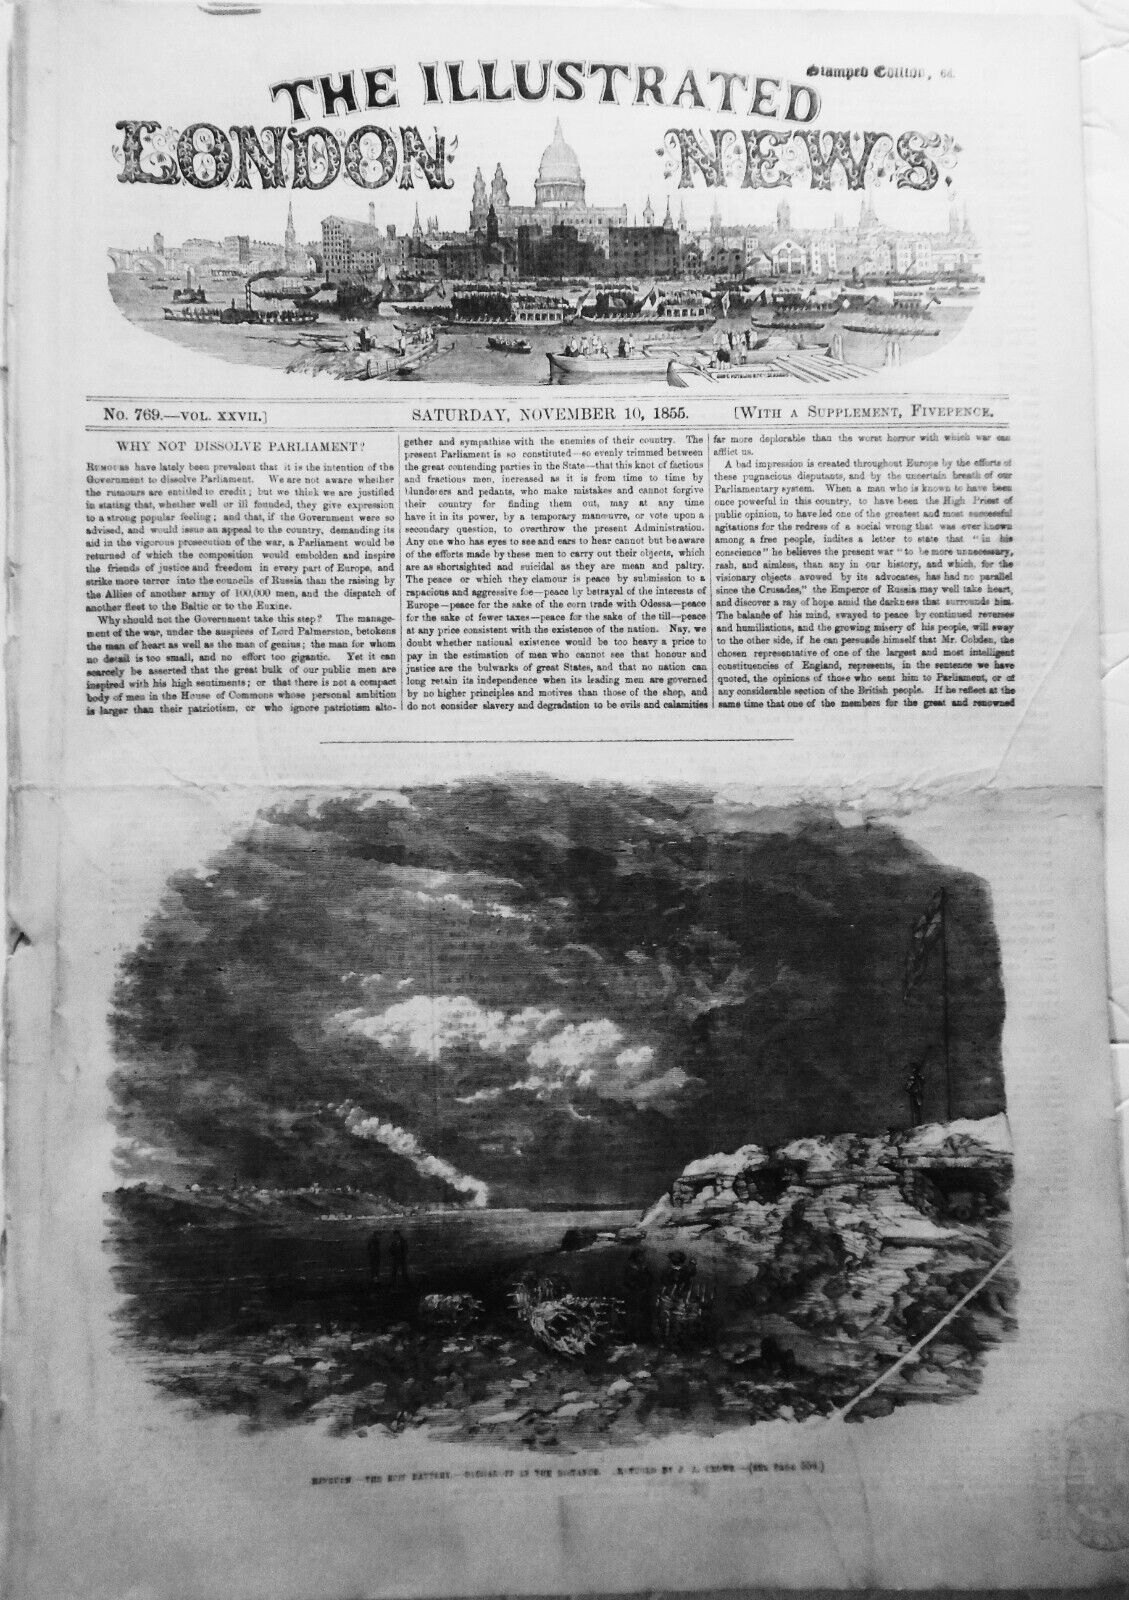 Illustrated London News November 10, 1855 - Bombardment & capture of Kinburn etc